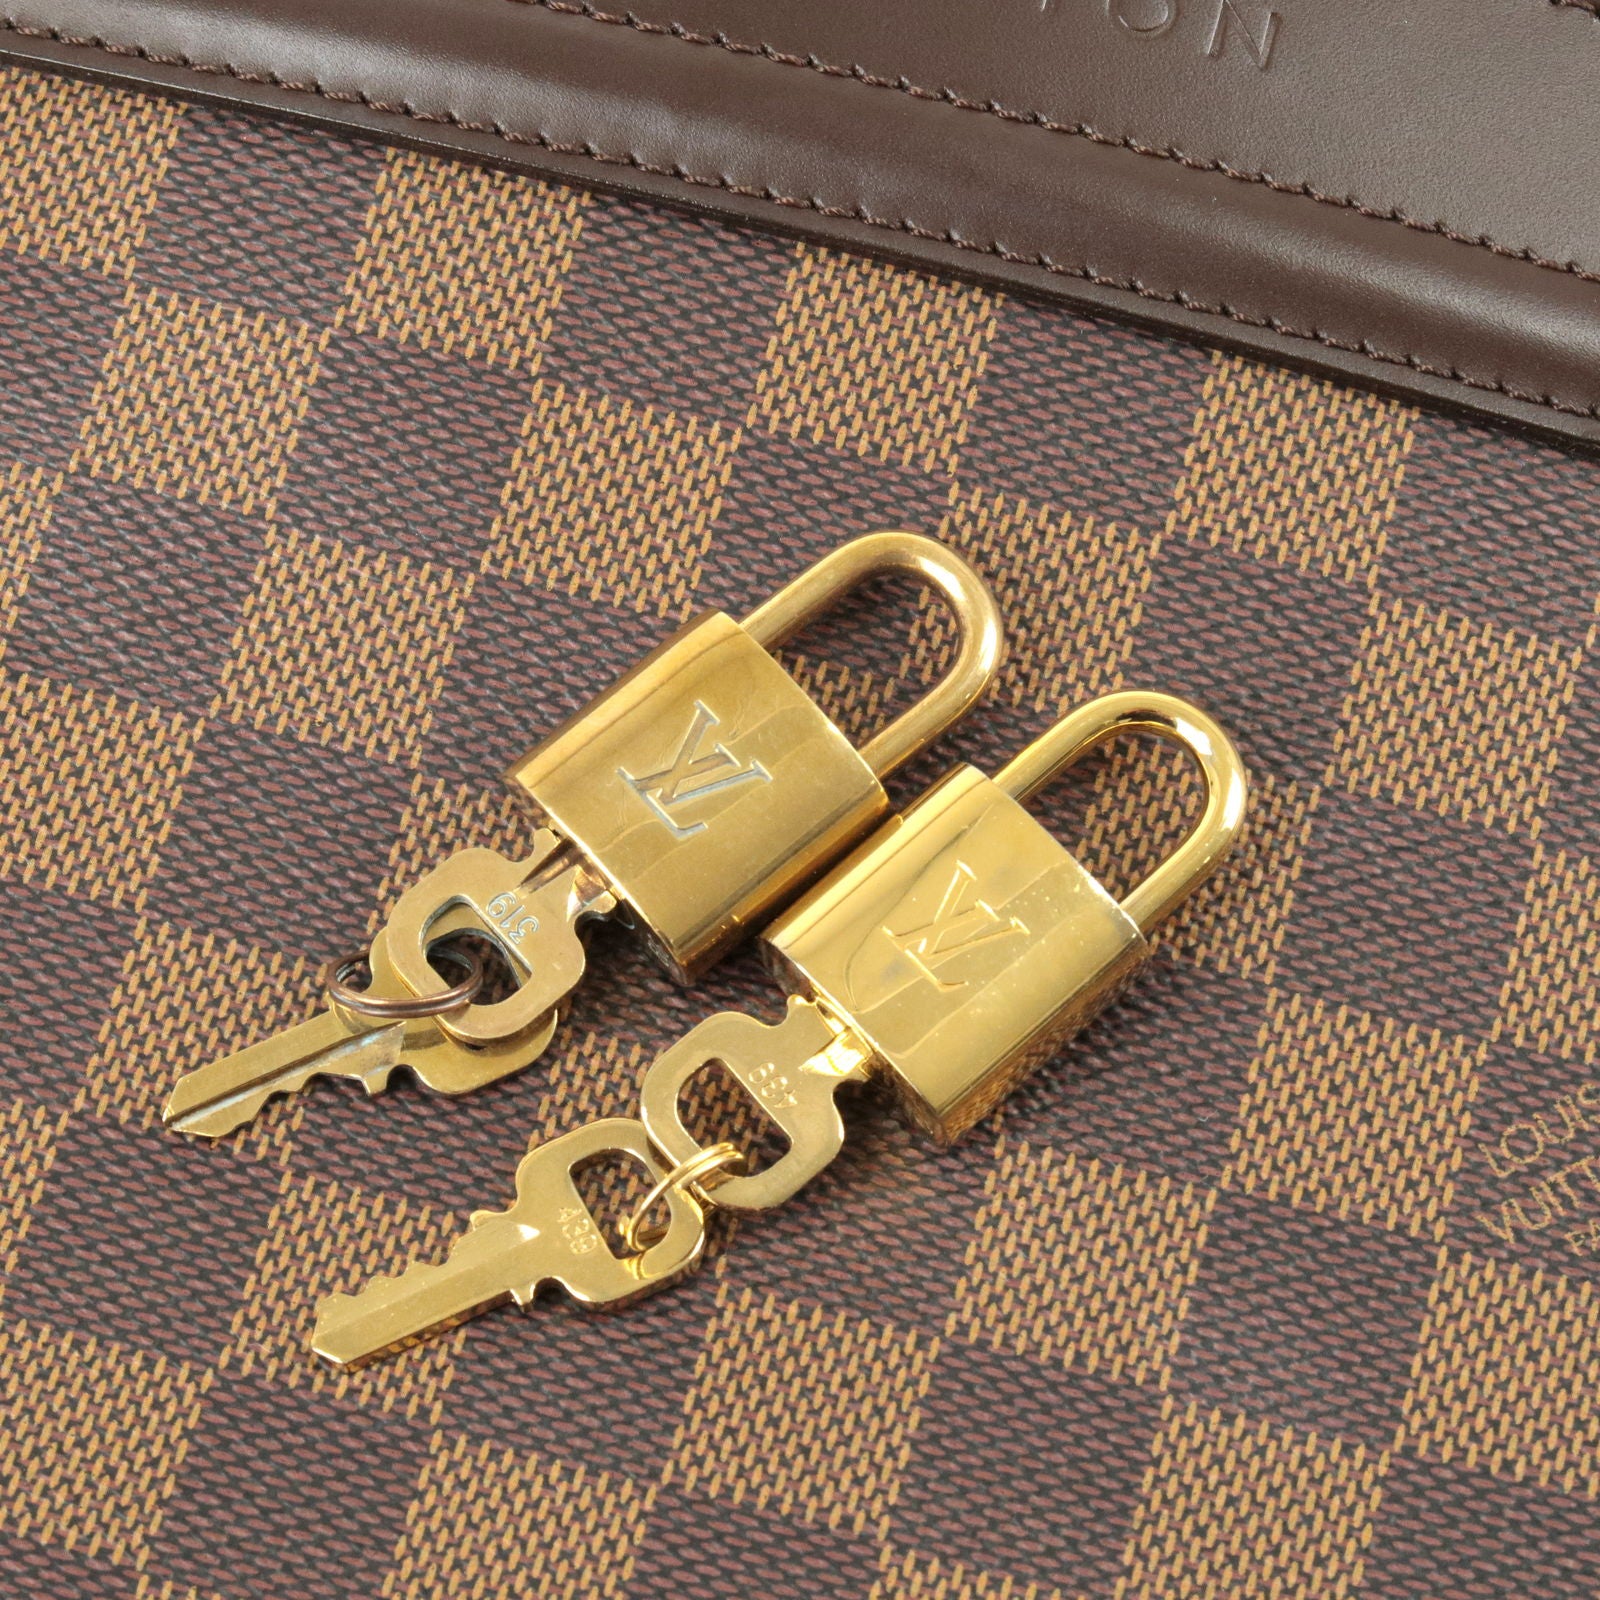 Louis Vuitton Damier Ebene Nolita GM Carry Luggage - Brown Luggage